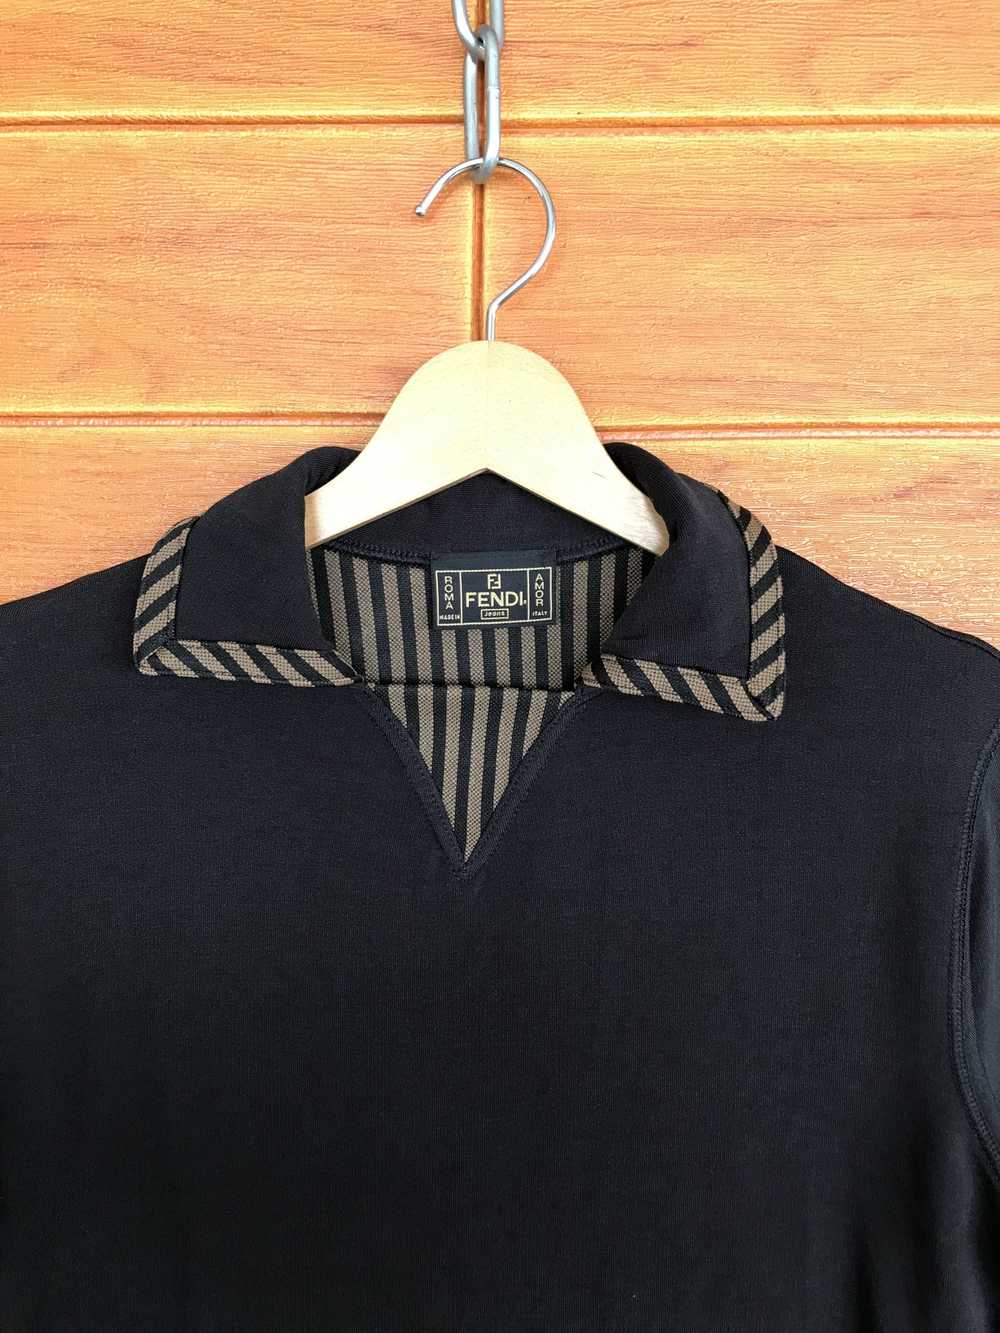 Fendi Fendi Made In Italy Longsleeve T-Shirt - image 2